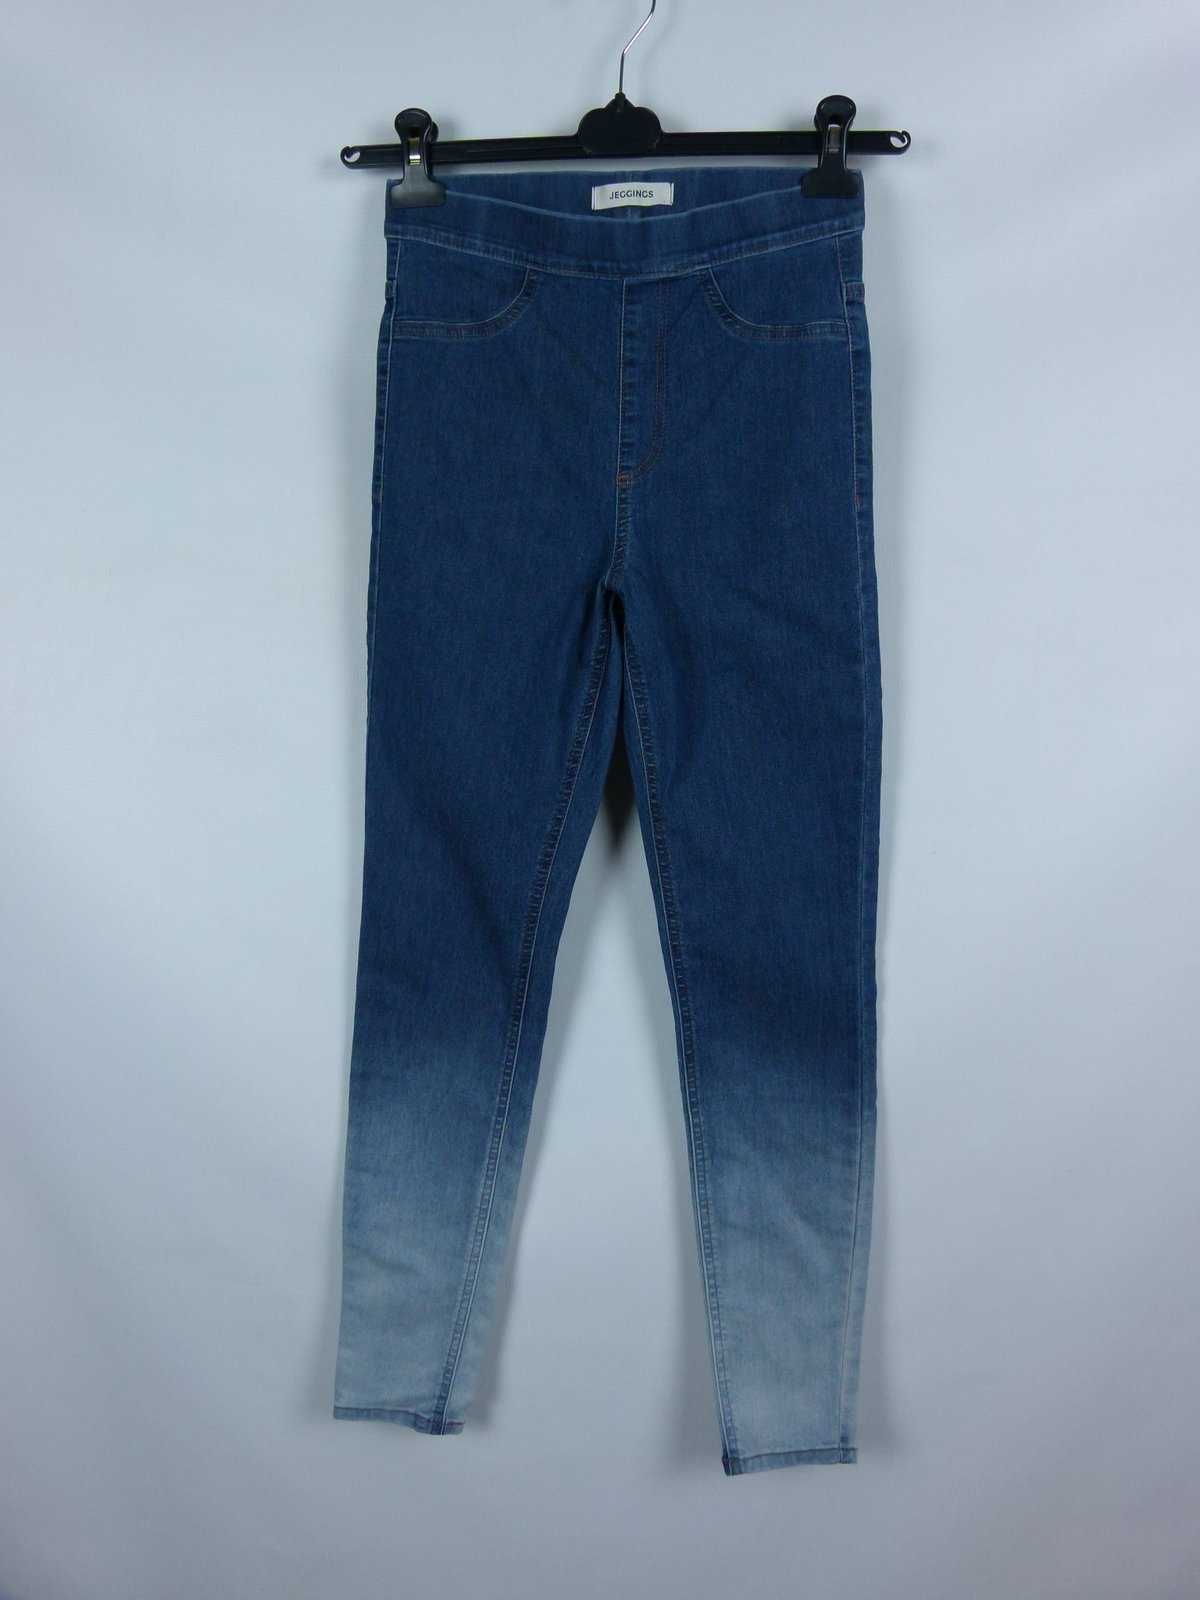 Marks Spencer Jeggings spodnie cienki jeans 8 / 36